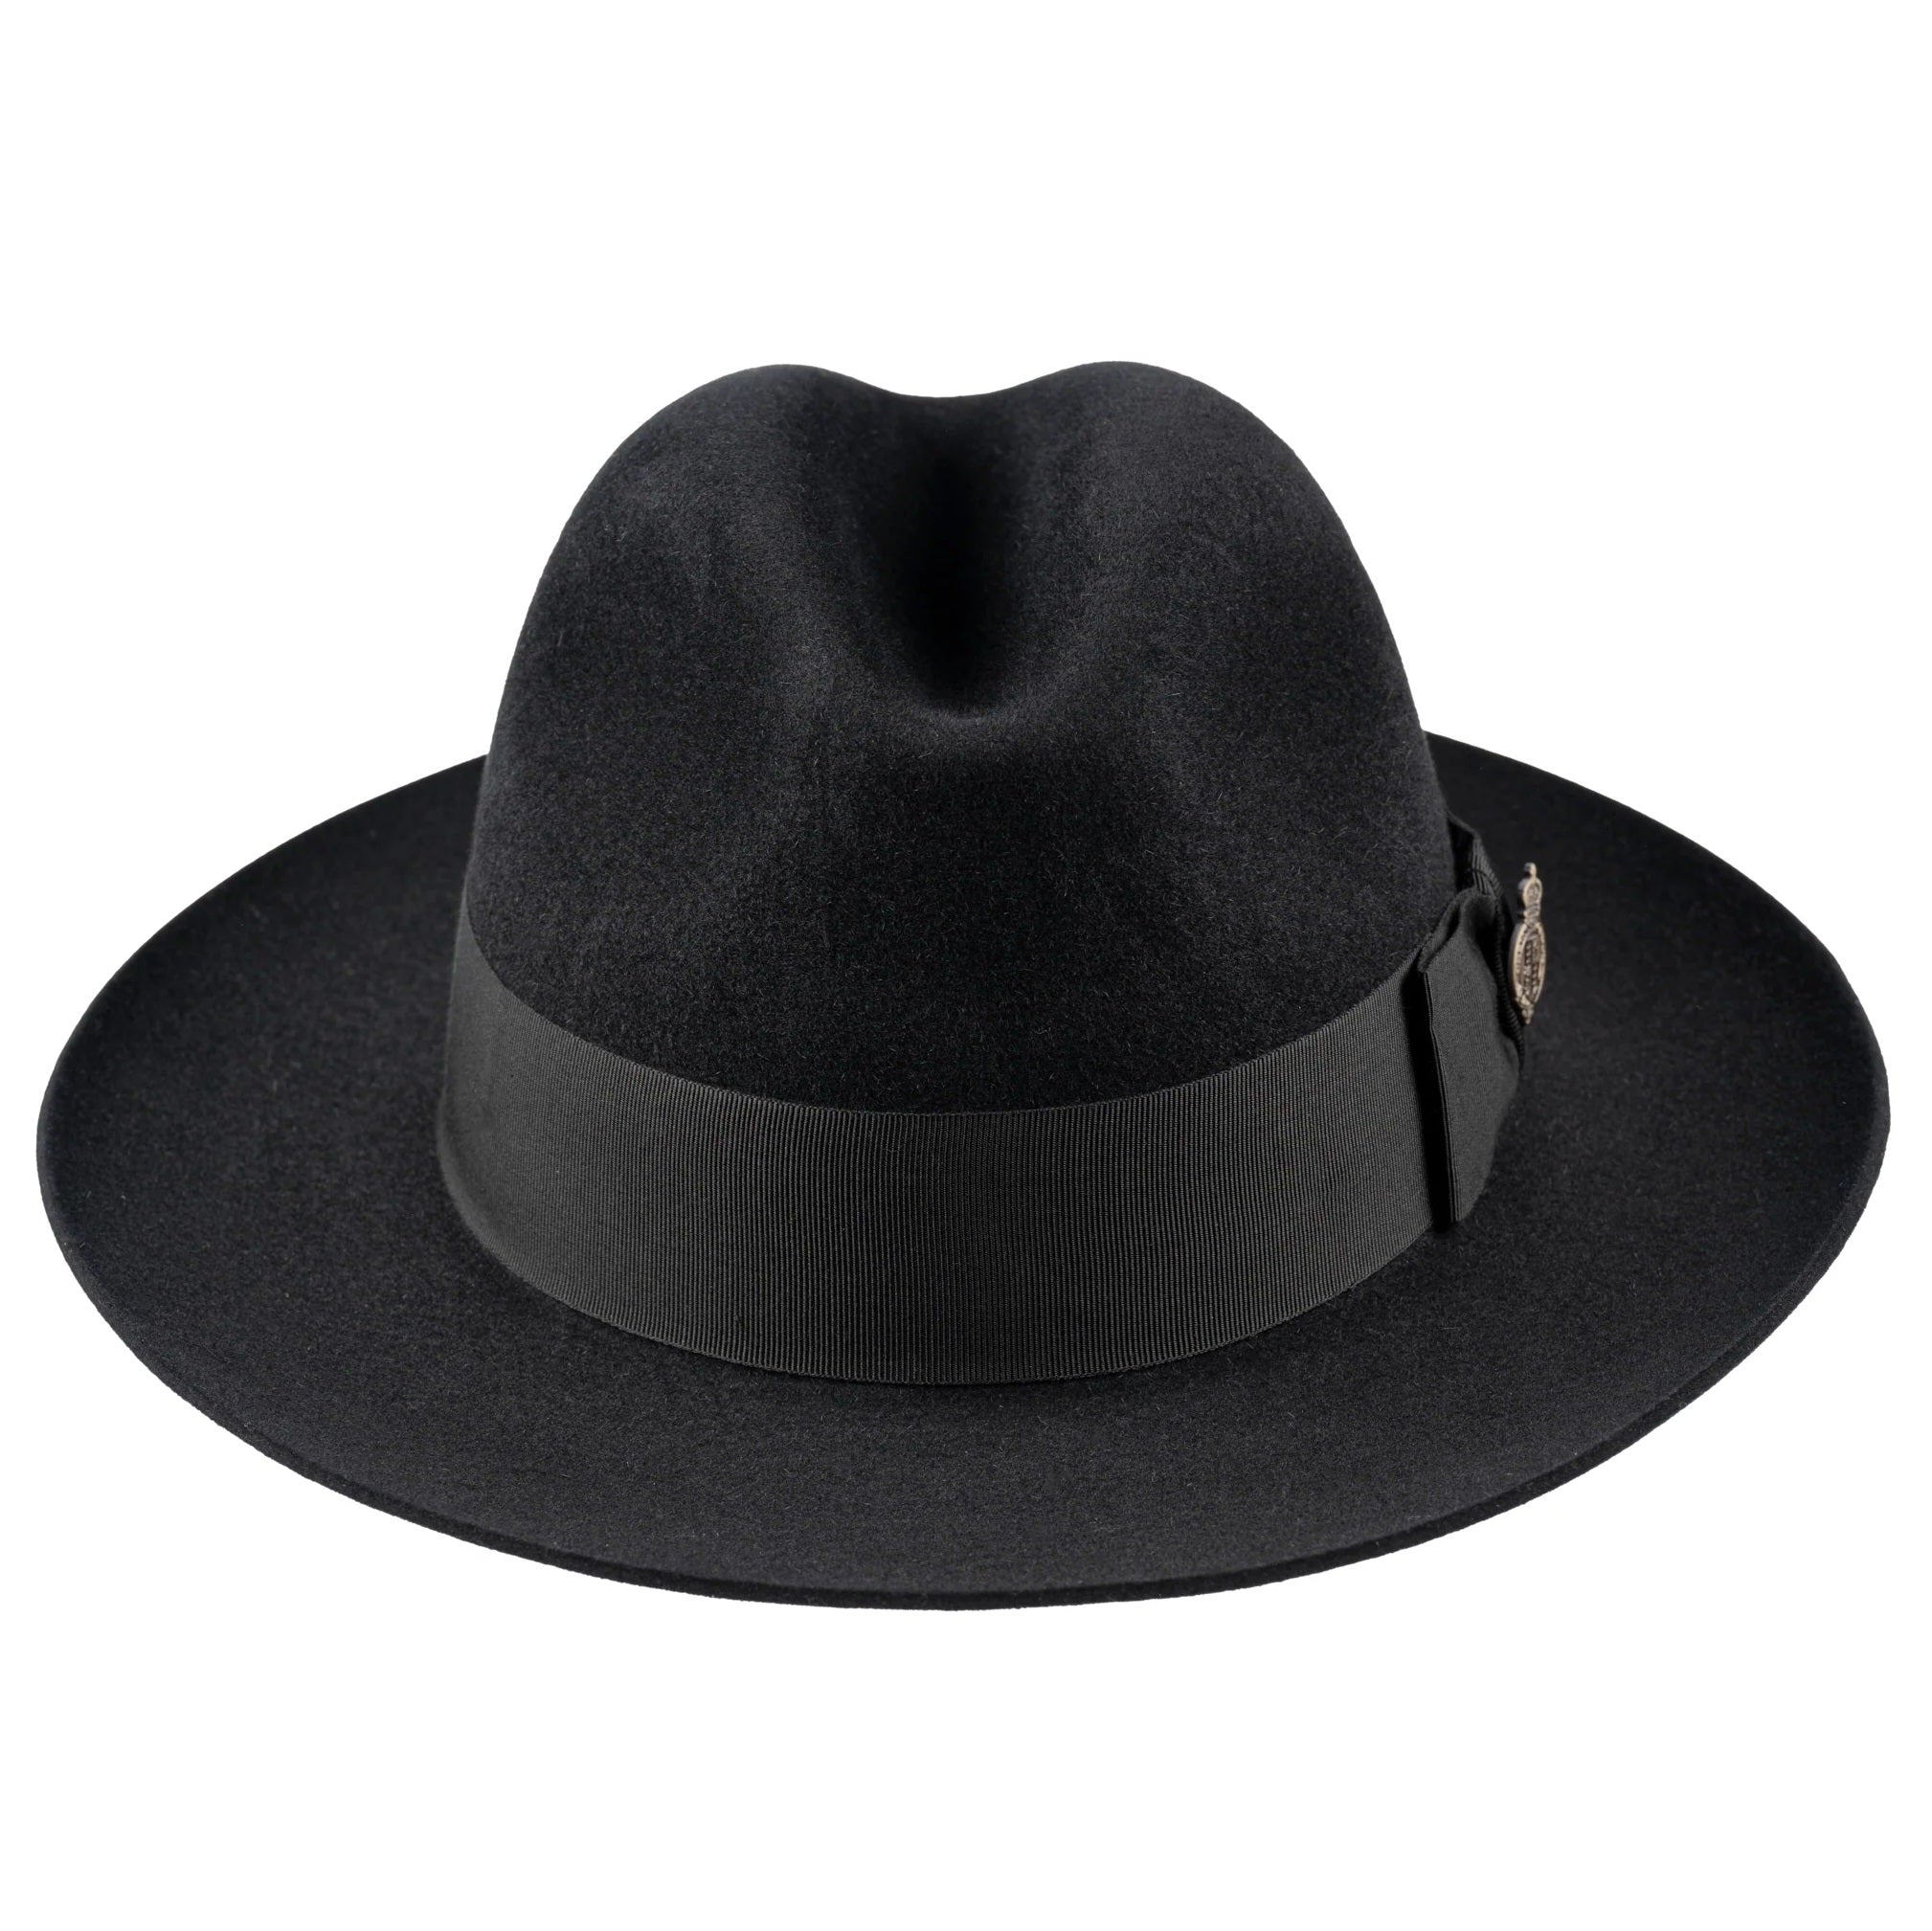 CHRISTYS' Classic Fur Felt Fedora Hat - Black